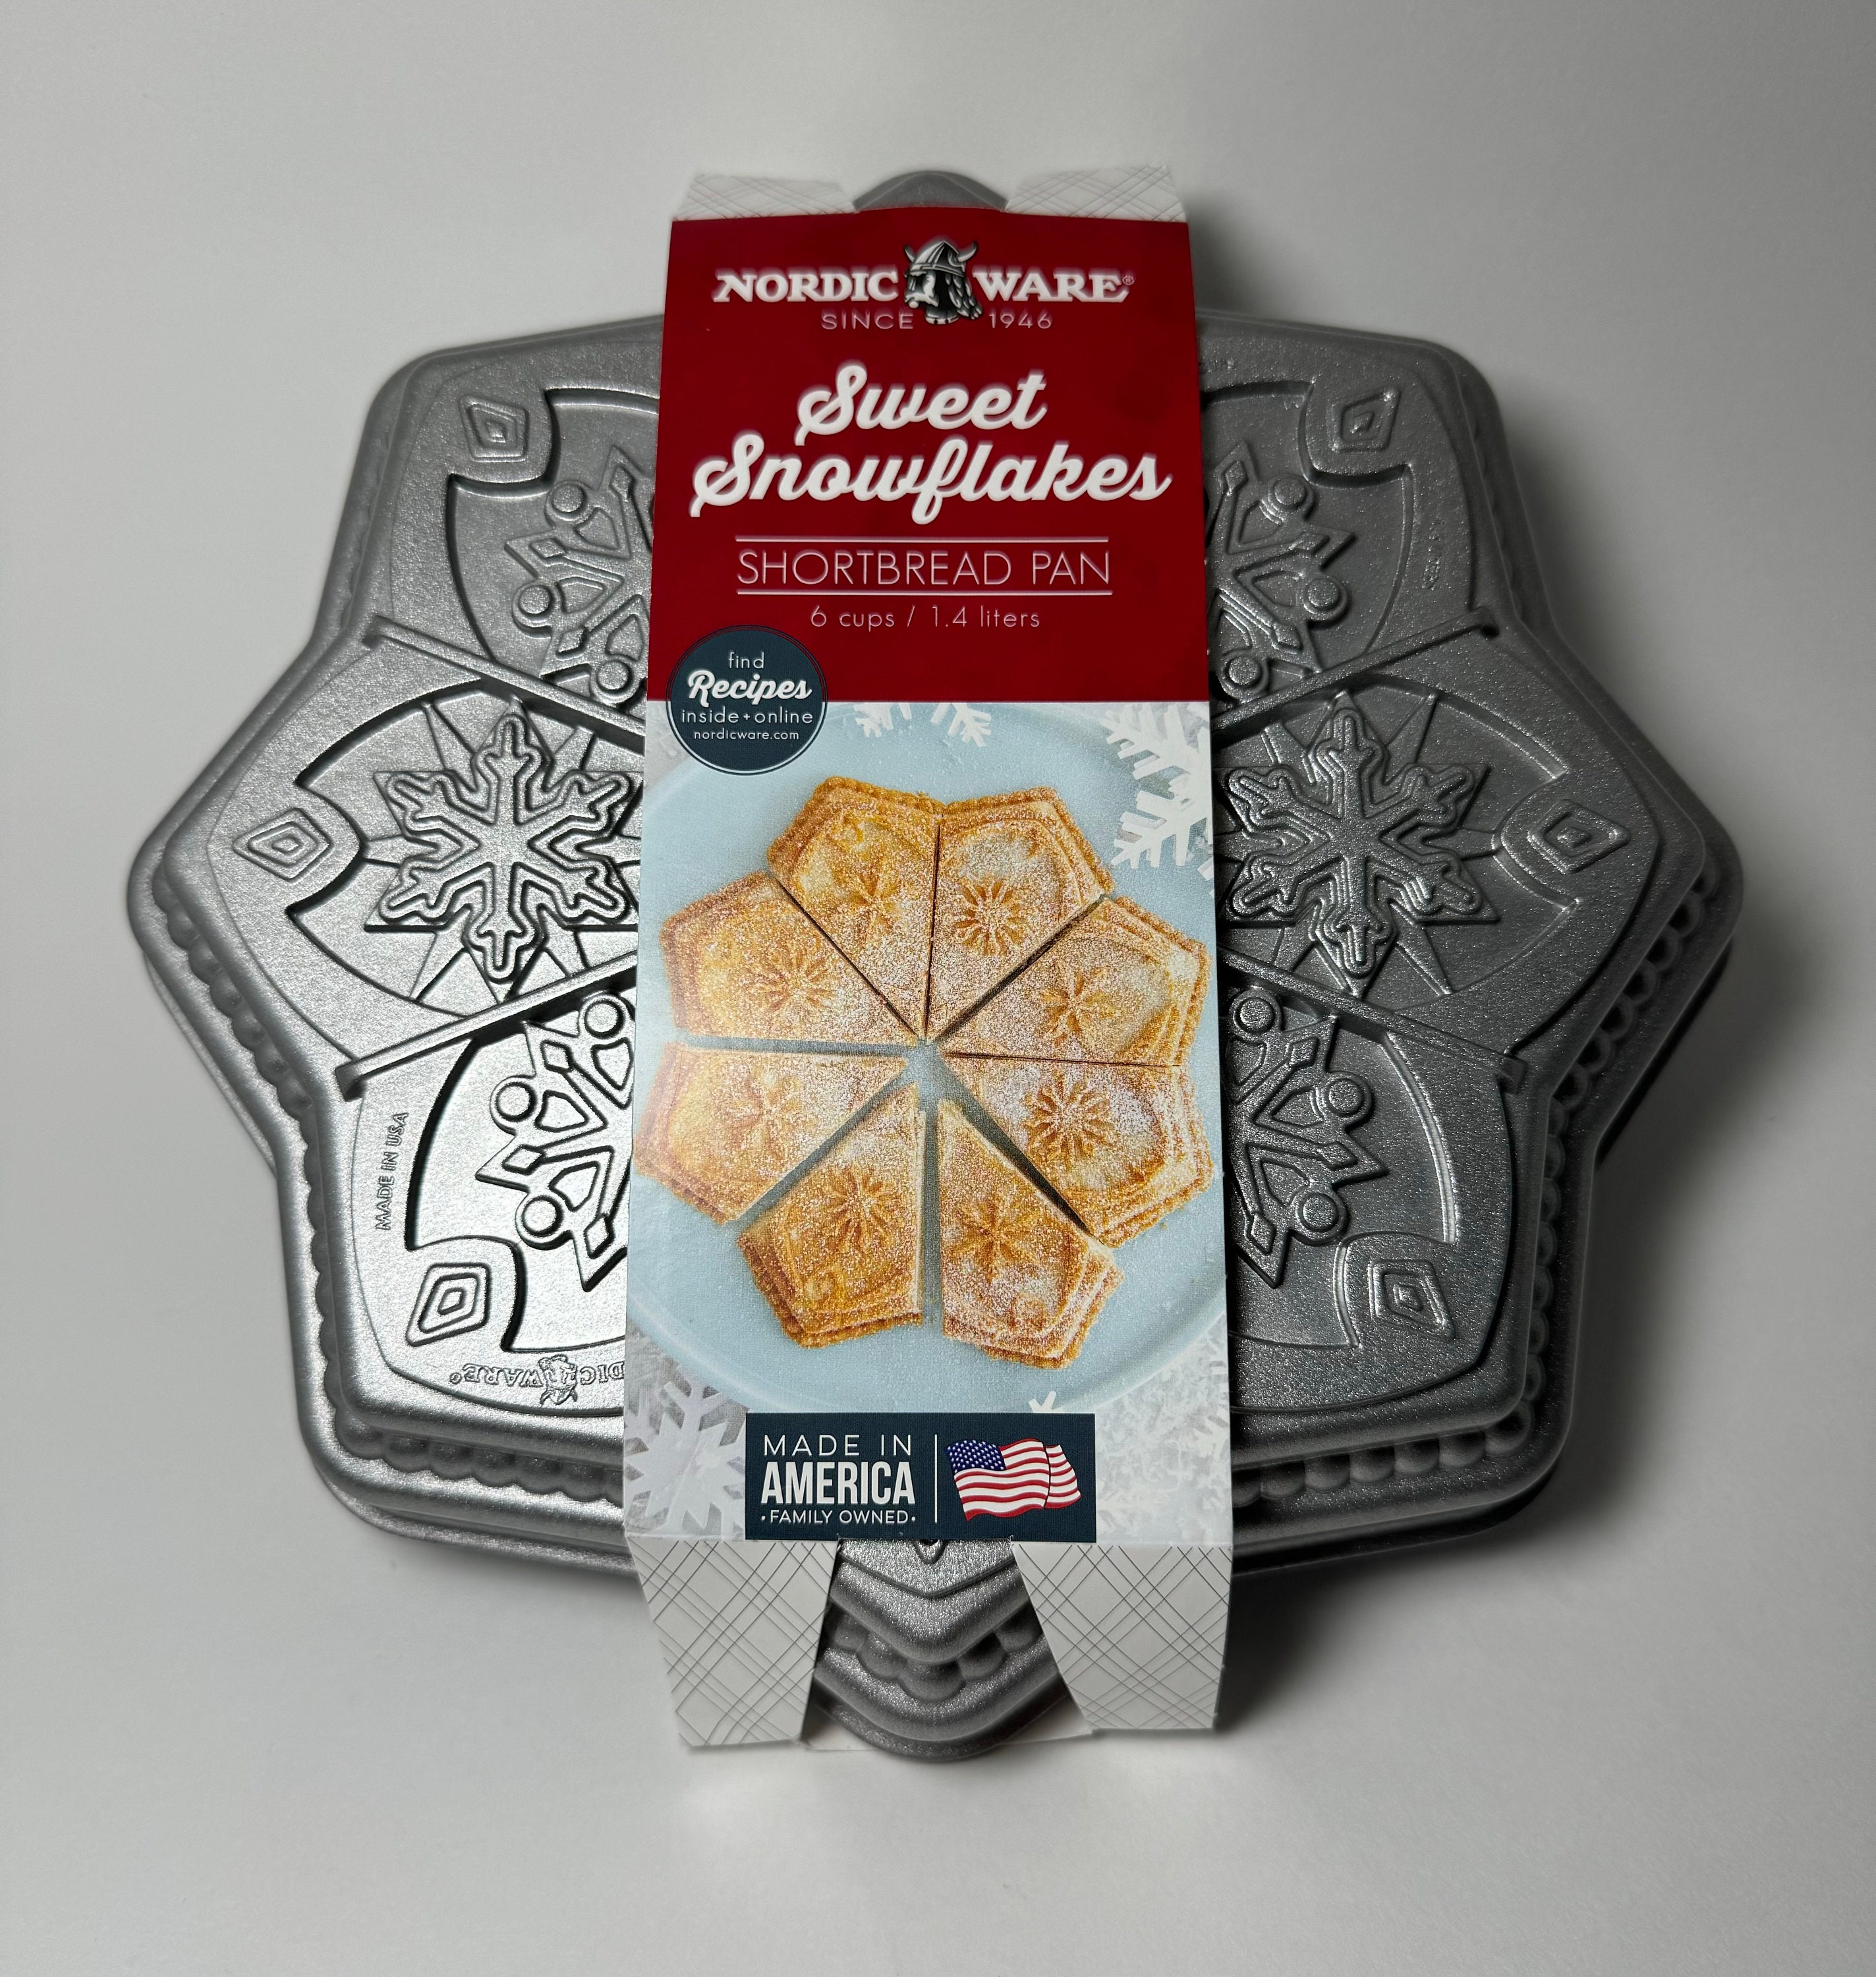  Nordic Ware Sweet Snowflakes Shortbread Pan, Silver